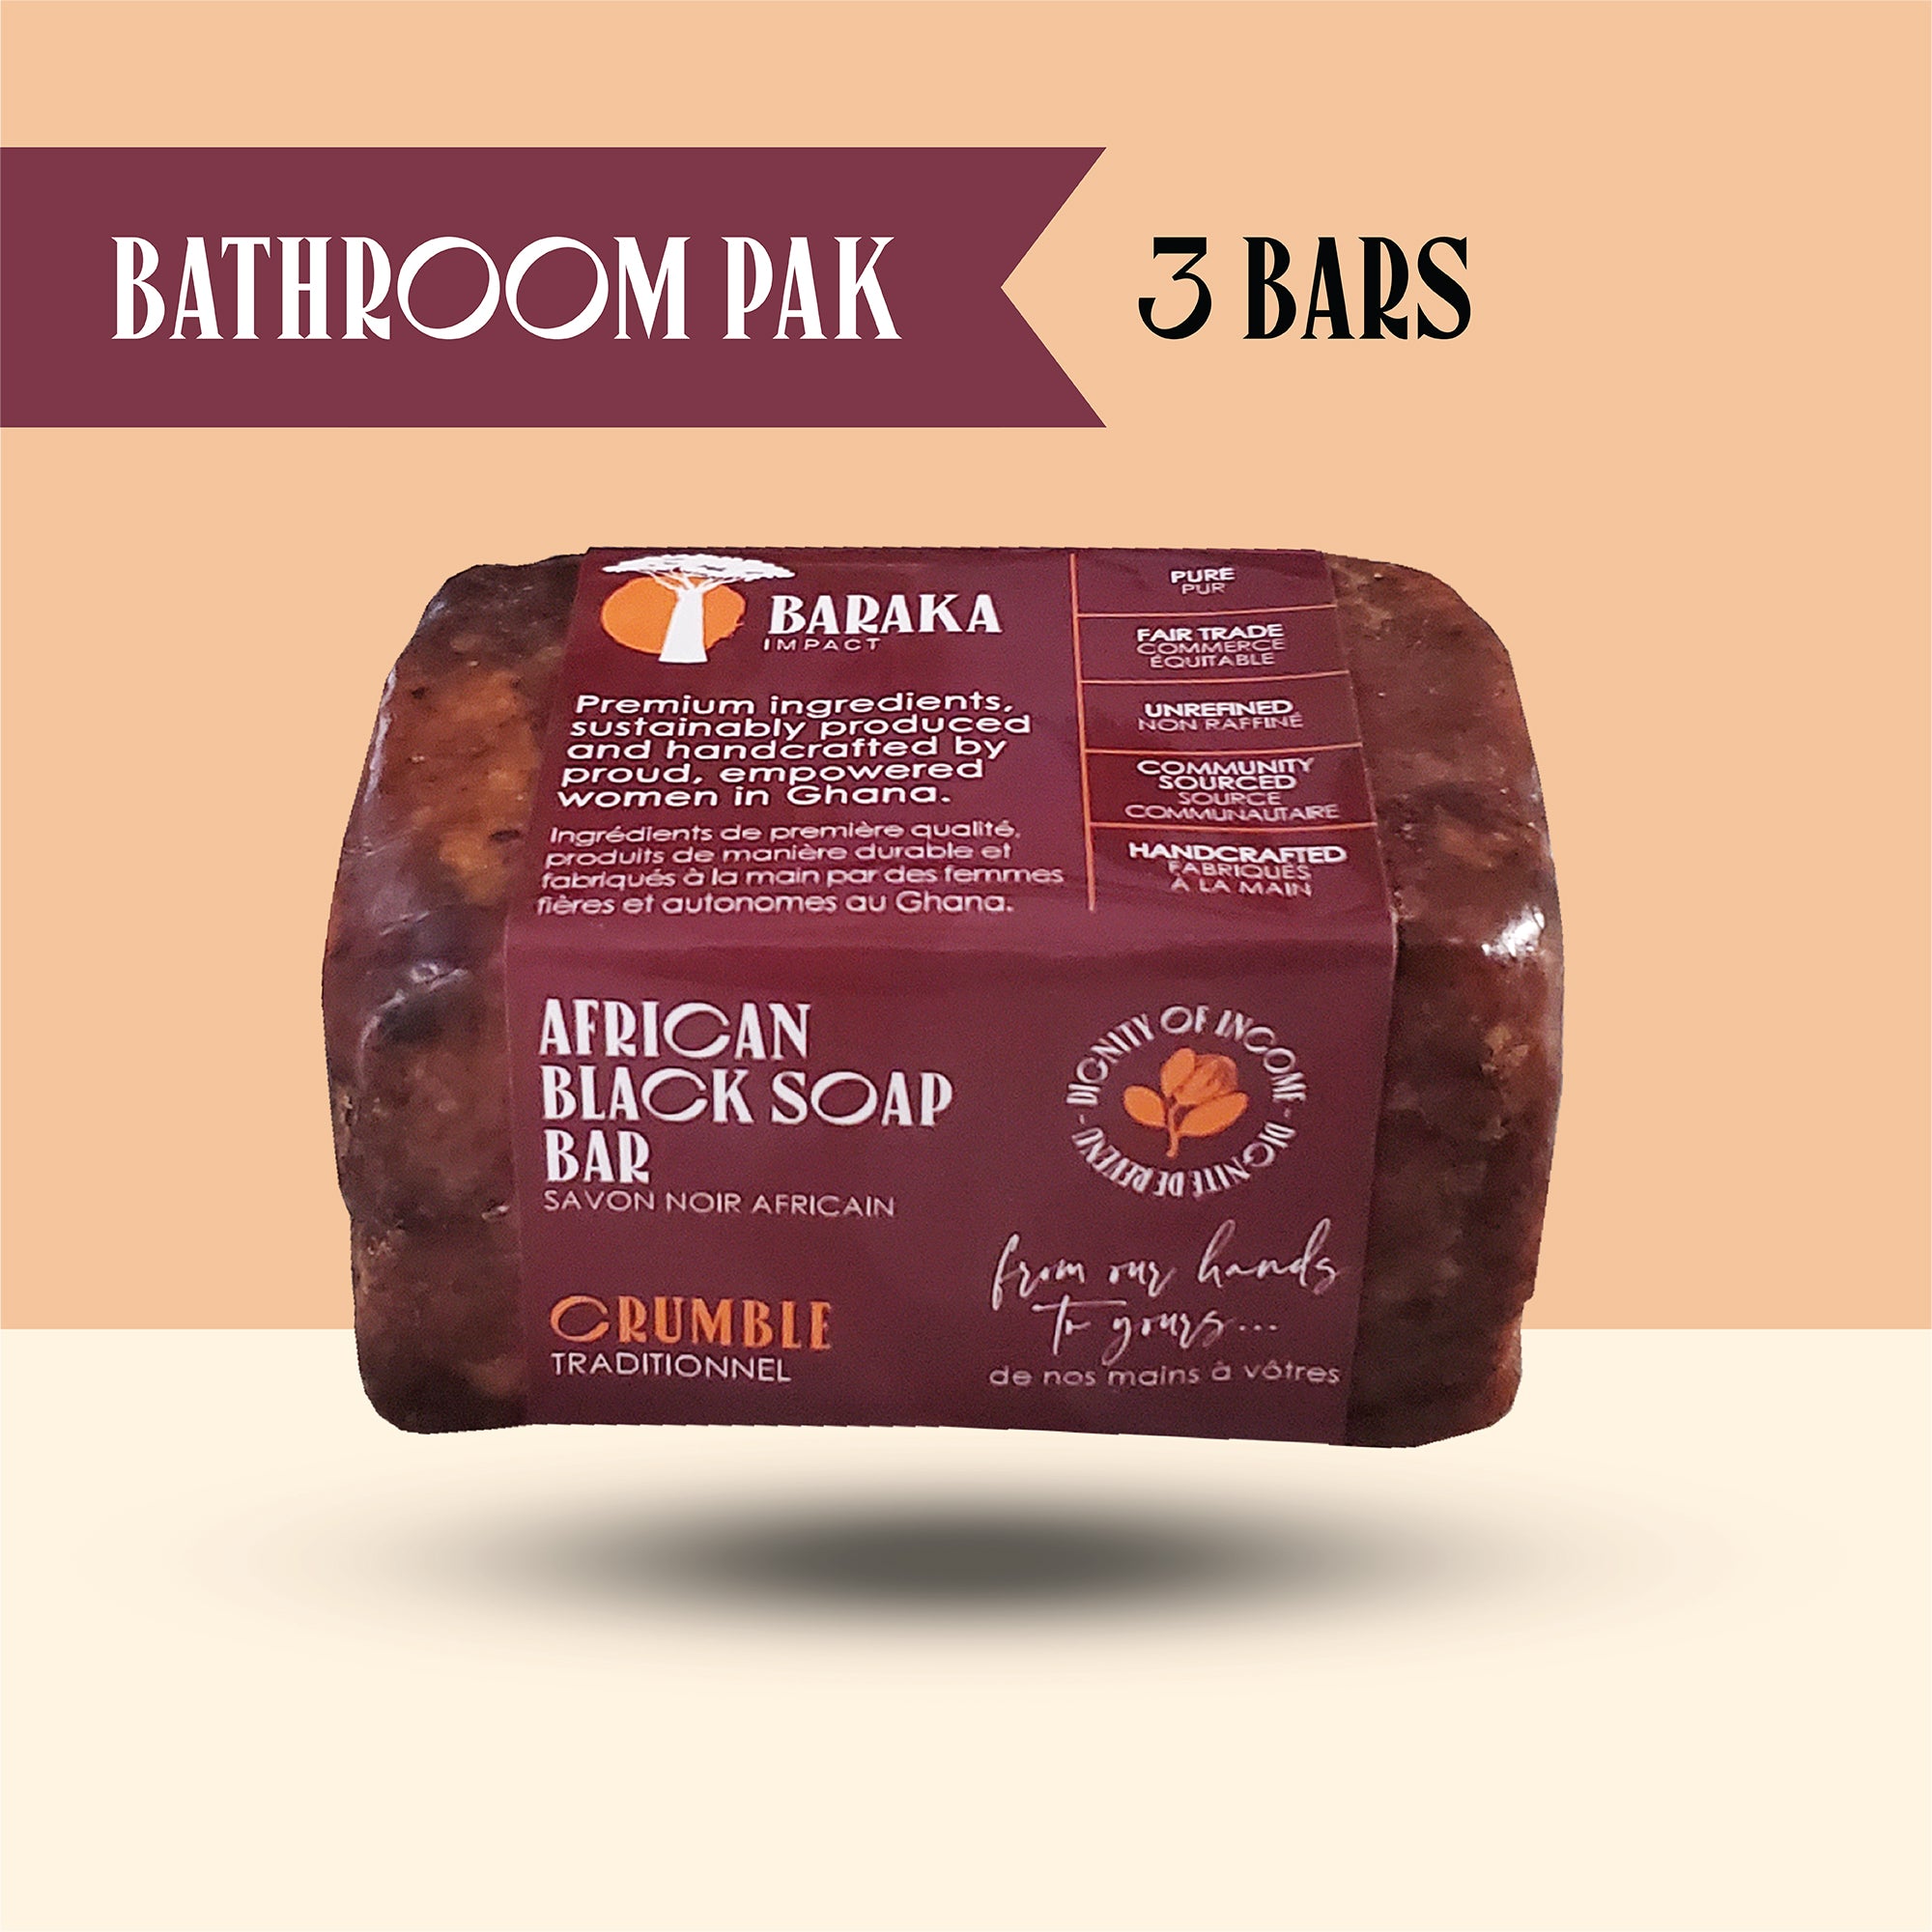 Baraka Original Crumble Bar Bathroom Pak --- [3 bars]